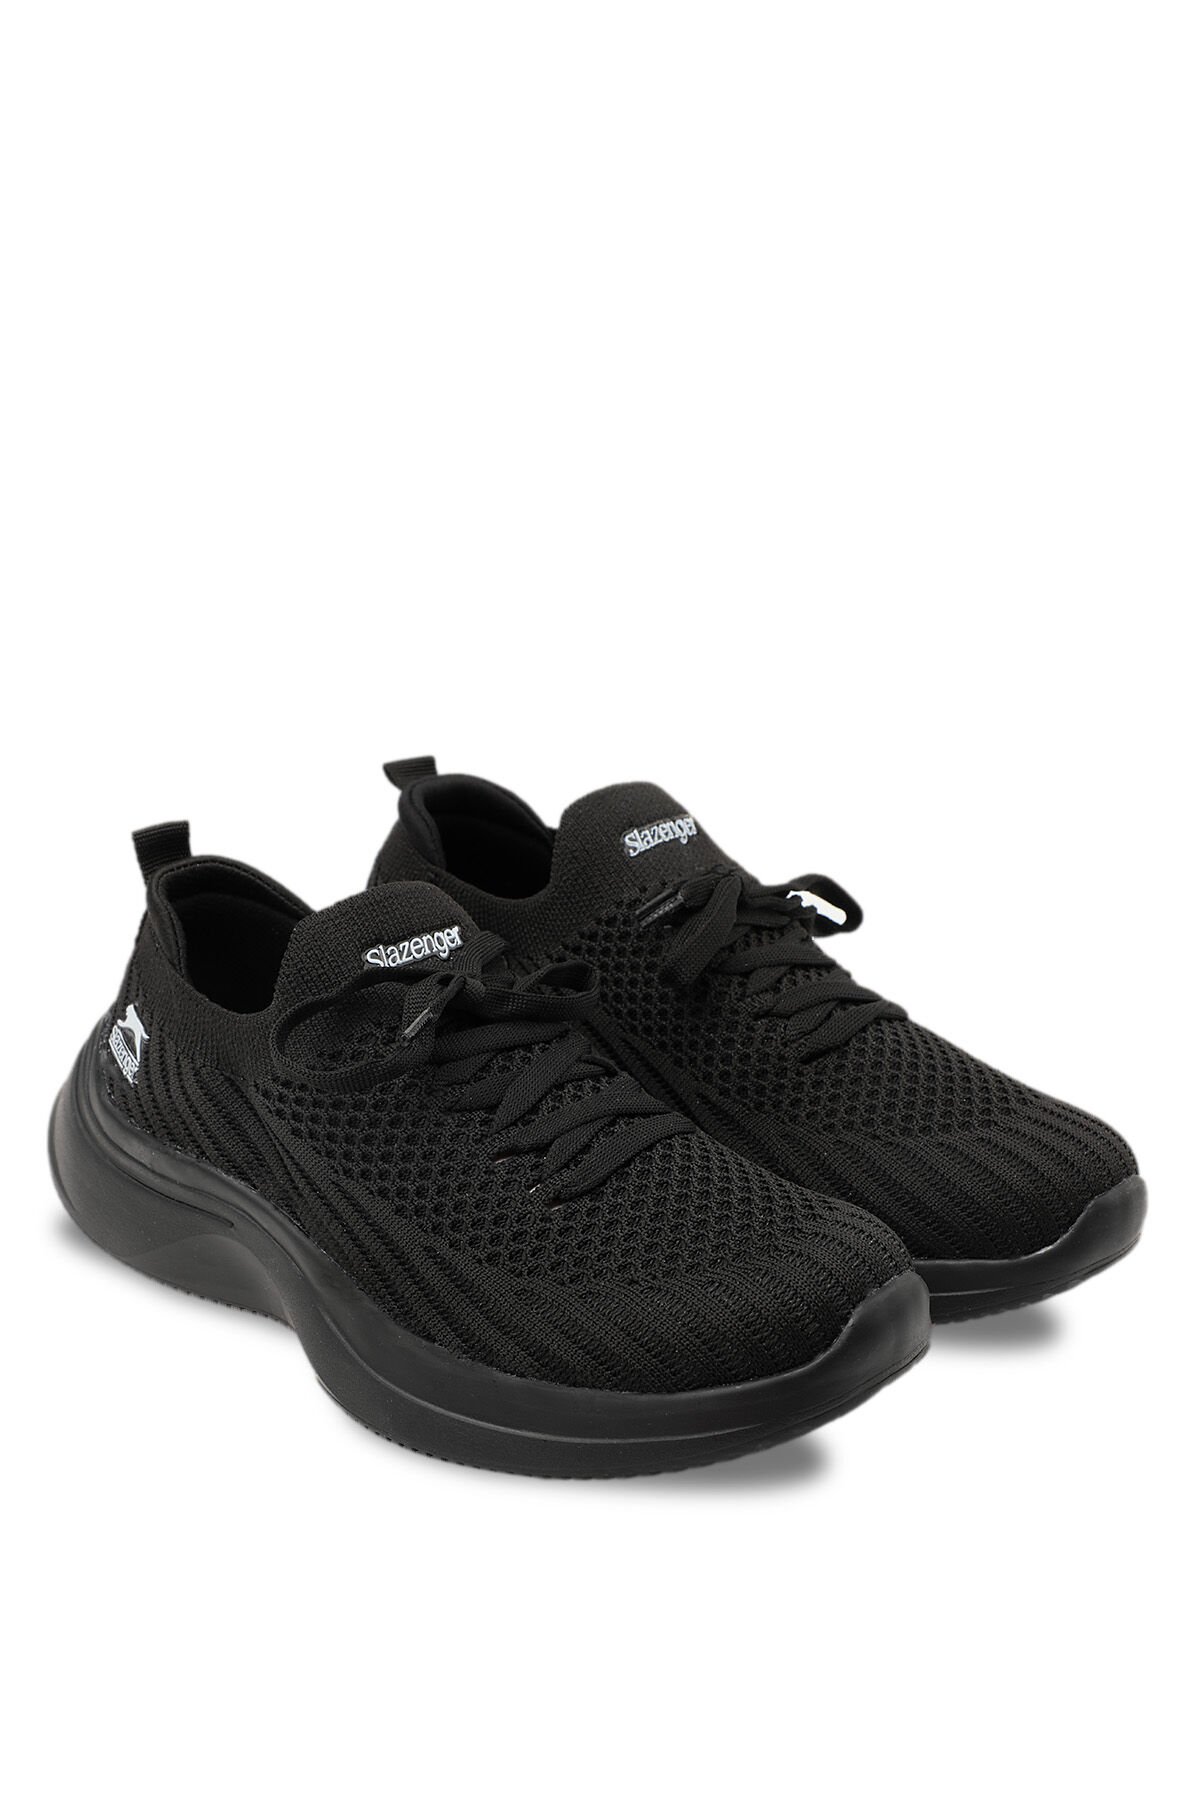 Slazenger ACCOUNT Sneaker Kadın Ayakkabı Siyah / Siyah - Thumbnail